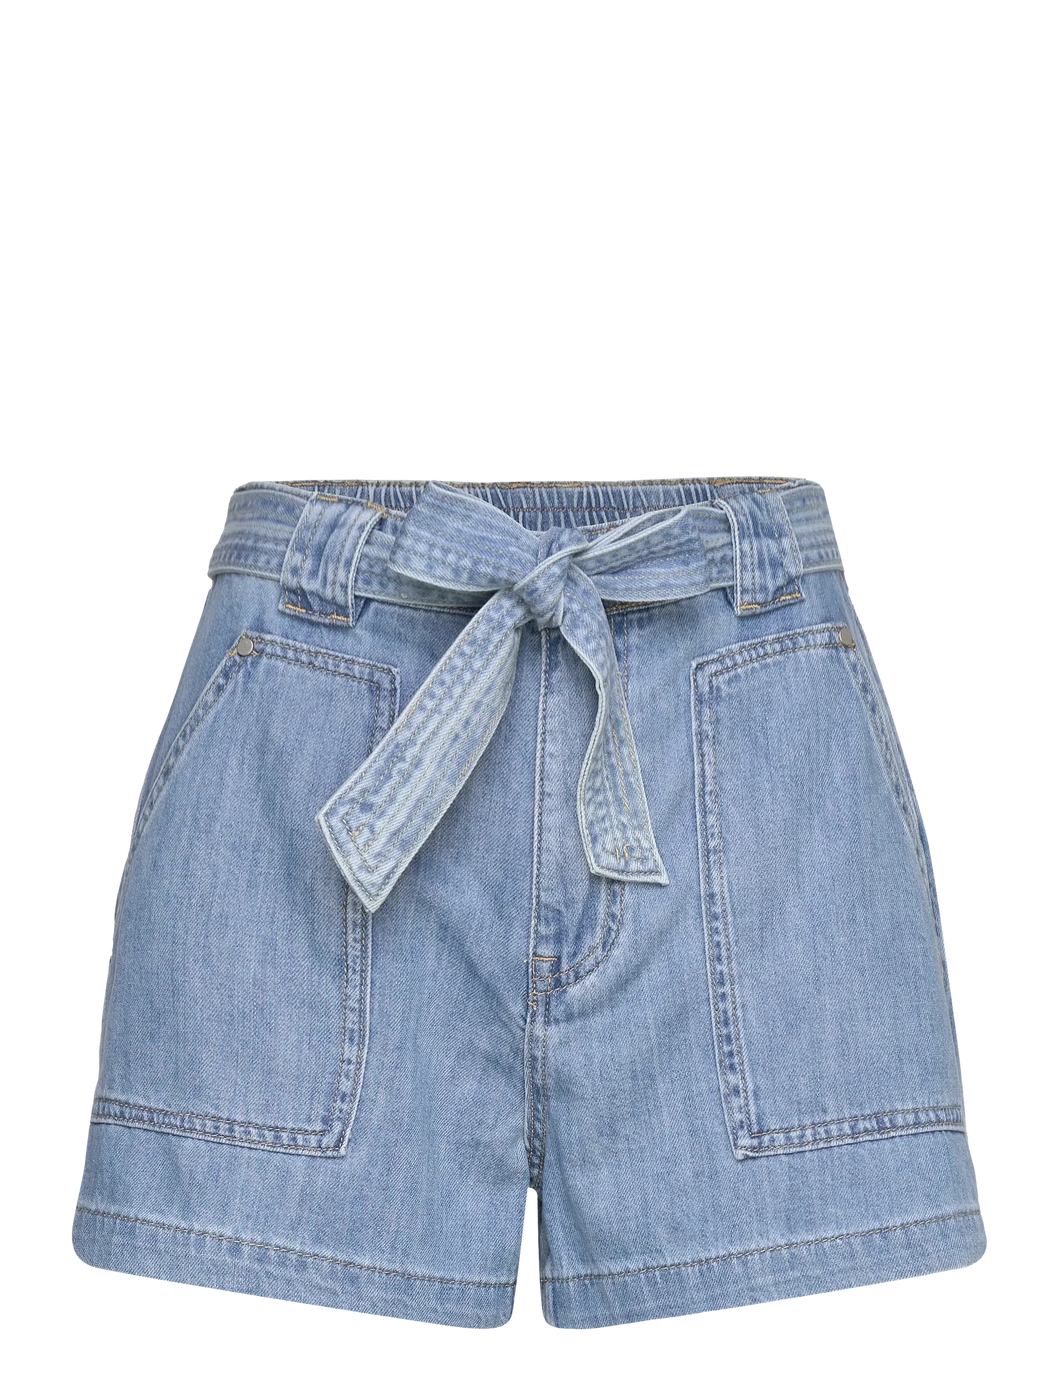 Suncoo Kira Short - Blue Jeans